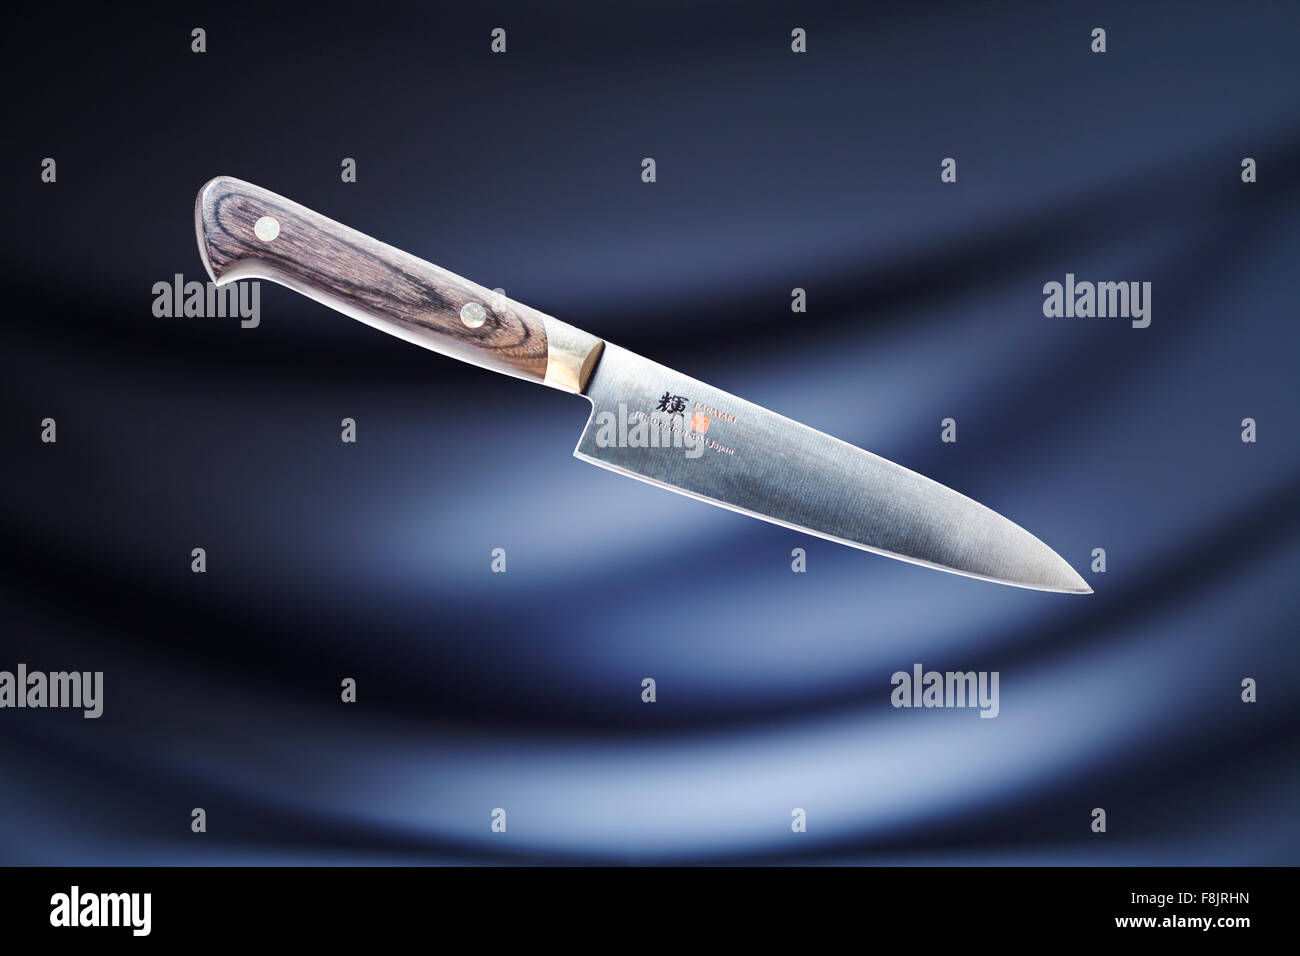 Knife against blue background Stock Photo